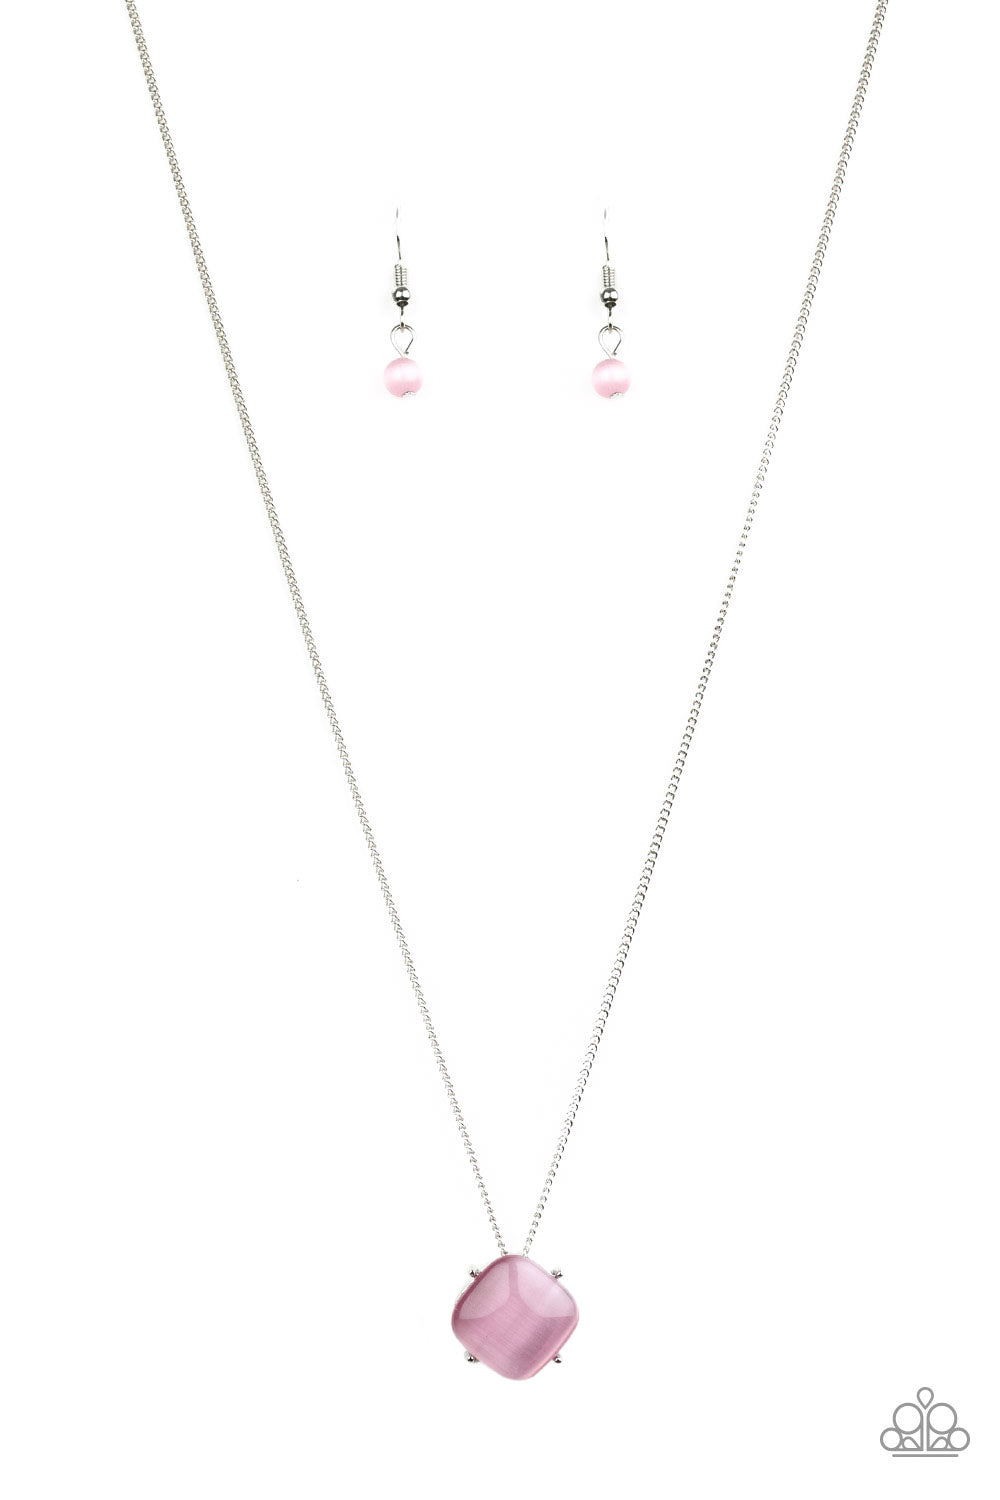 You GLOW Girl - pink - Paparazzi necklace – JewelryBlingThing